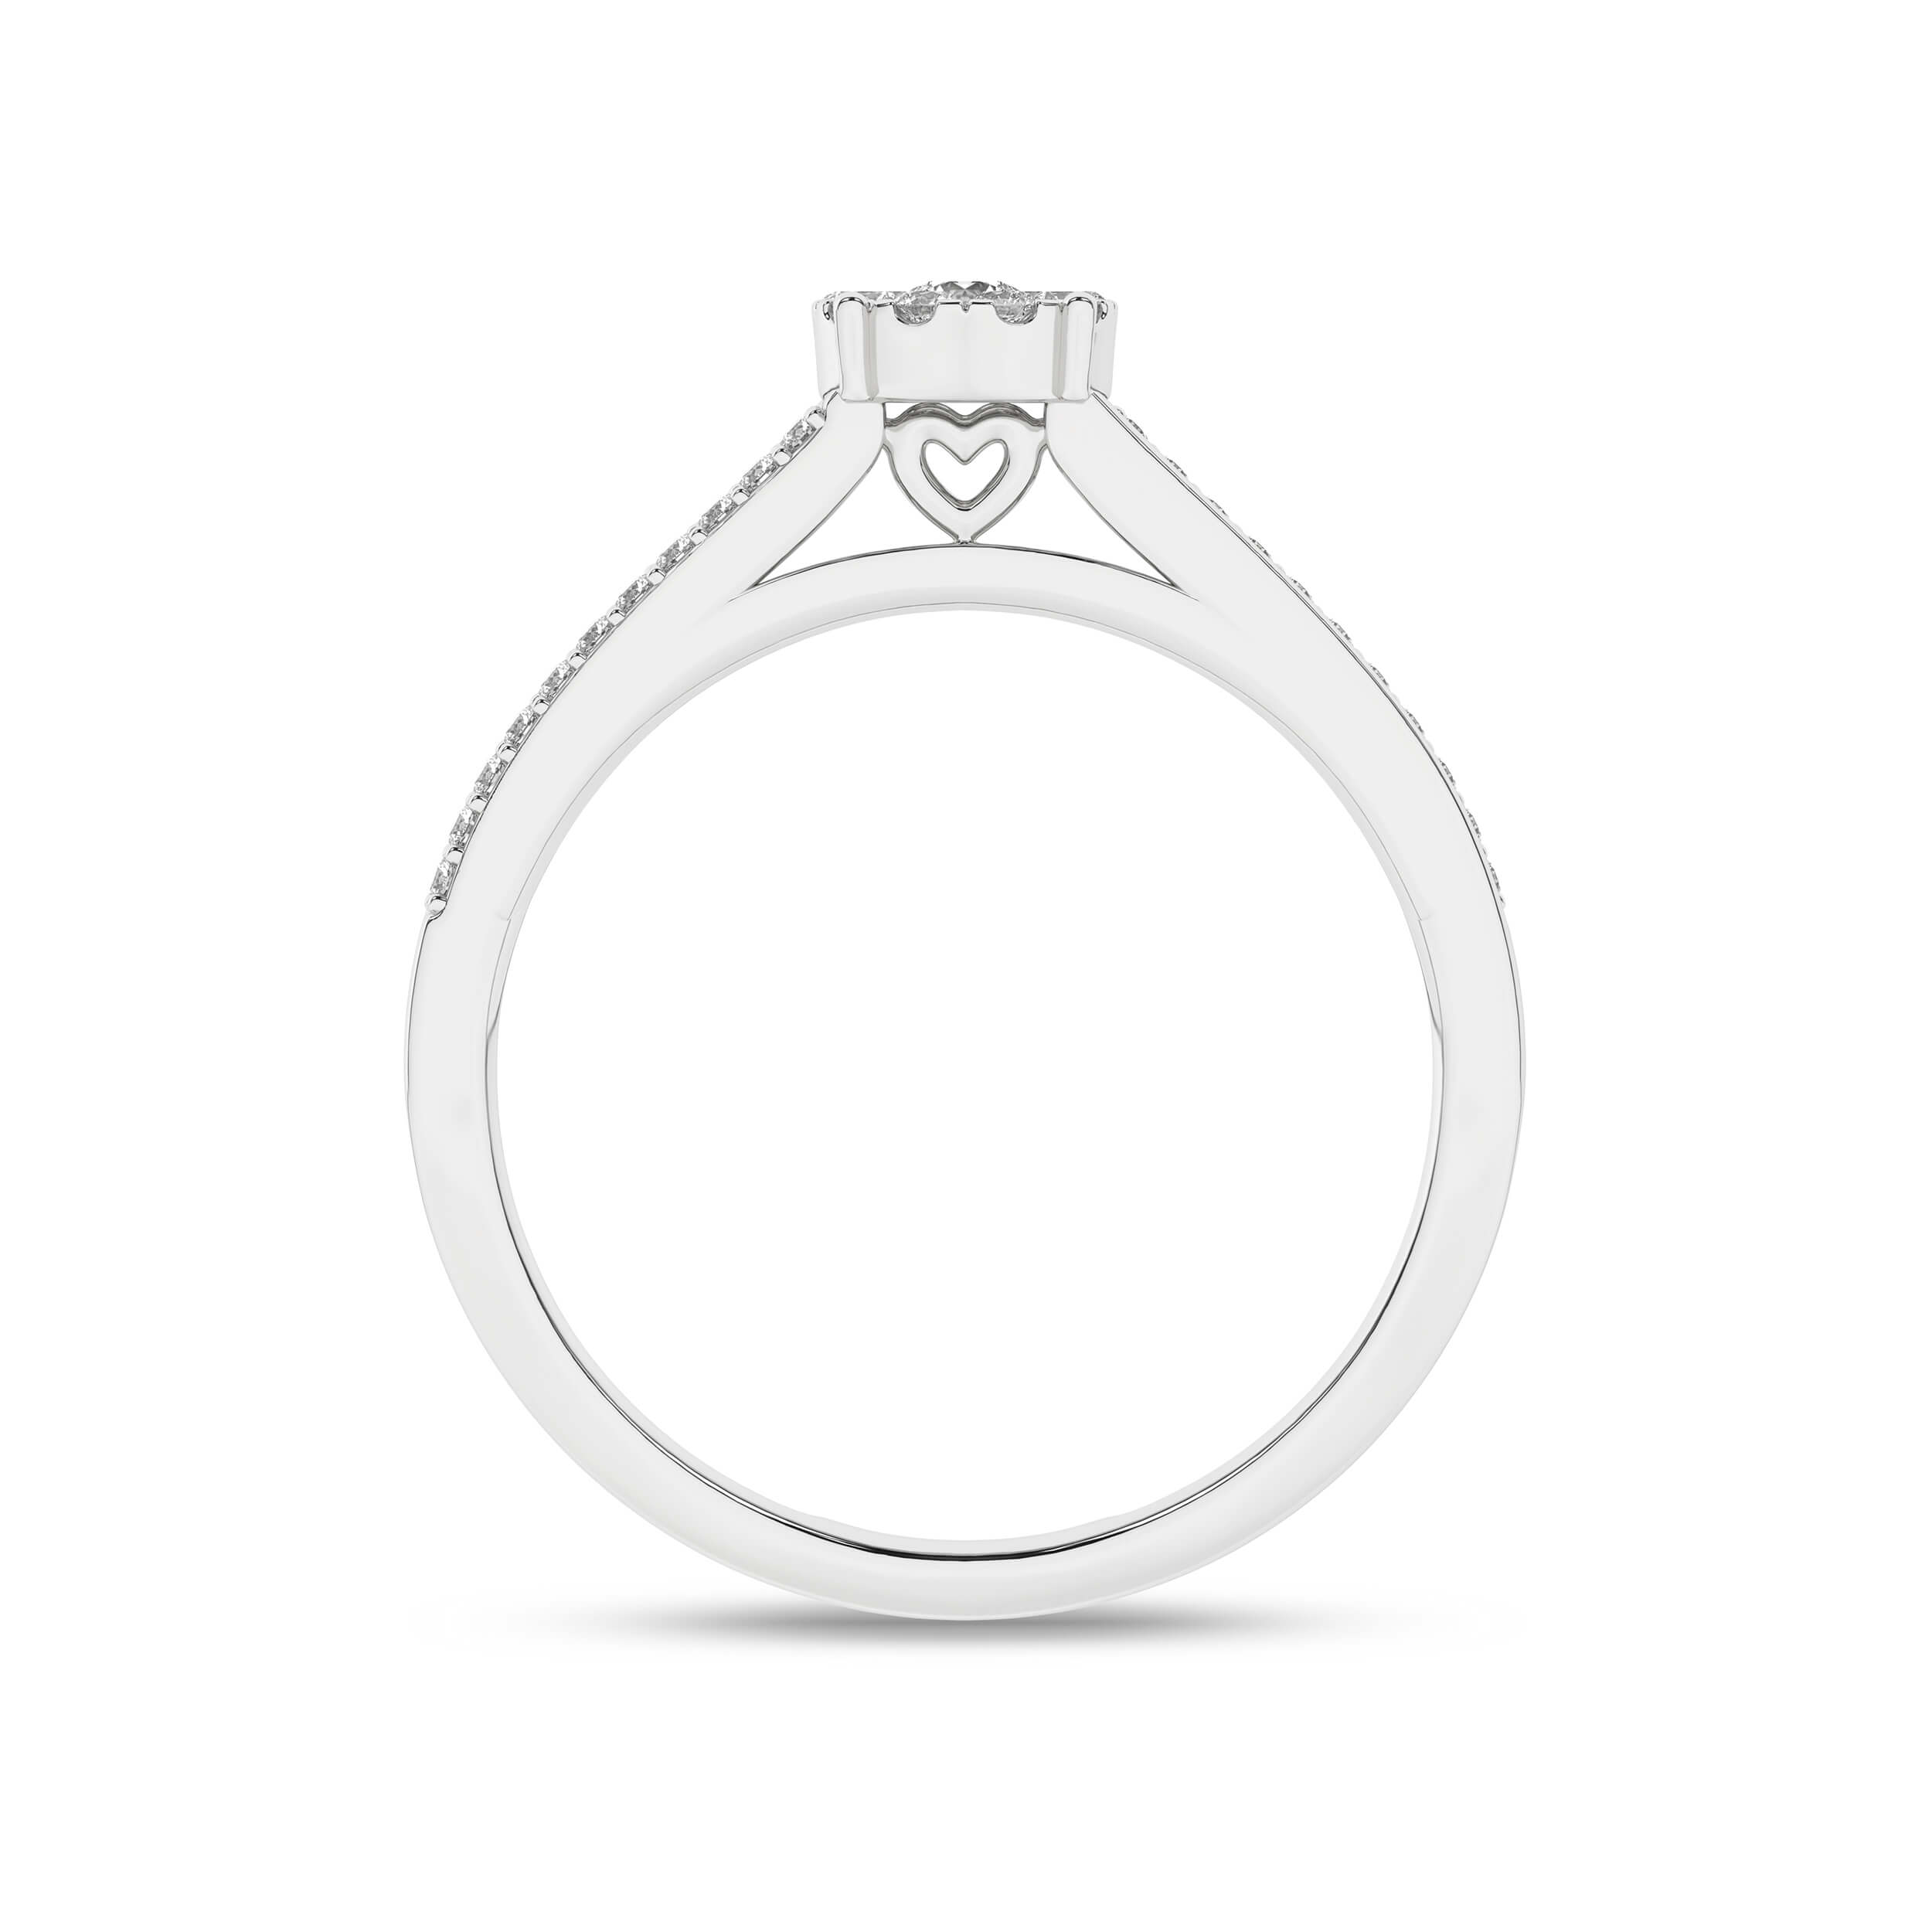 Inel de logodna din Aur Alb 14K cu Diamante 0.15Ct, articol RB6344, previzualizare foto 3